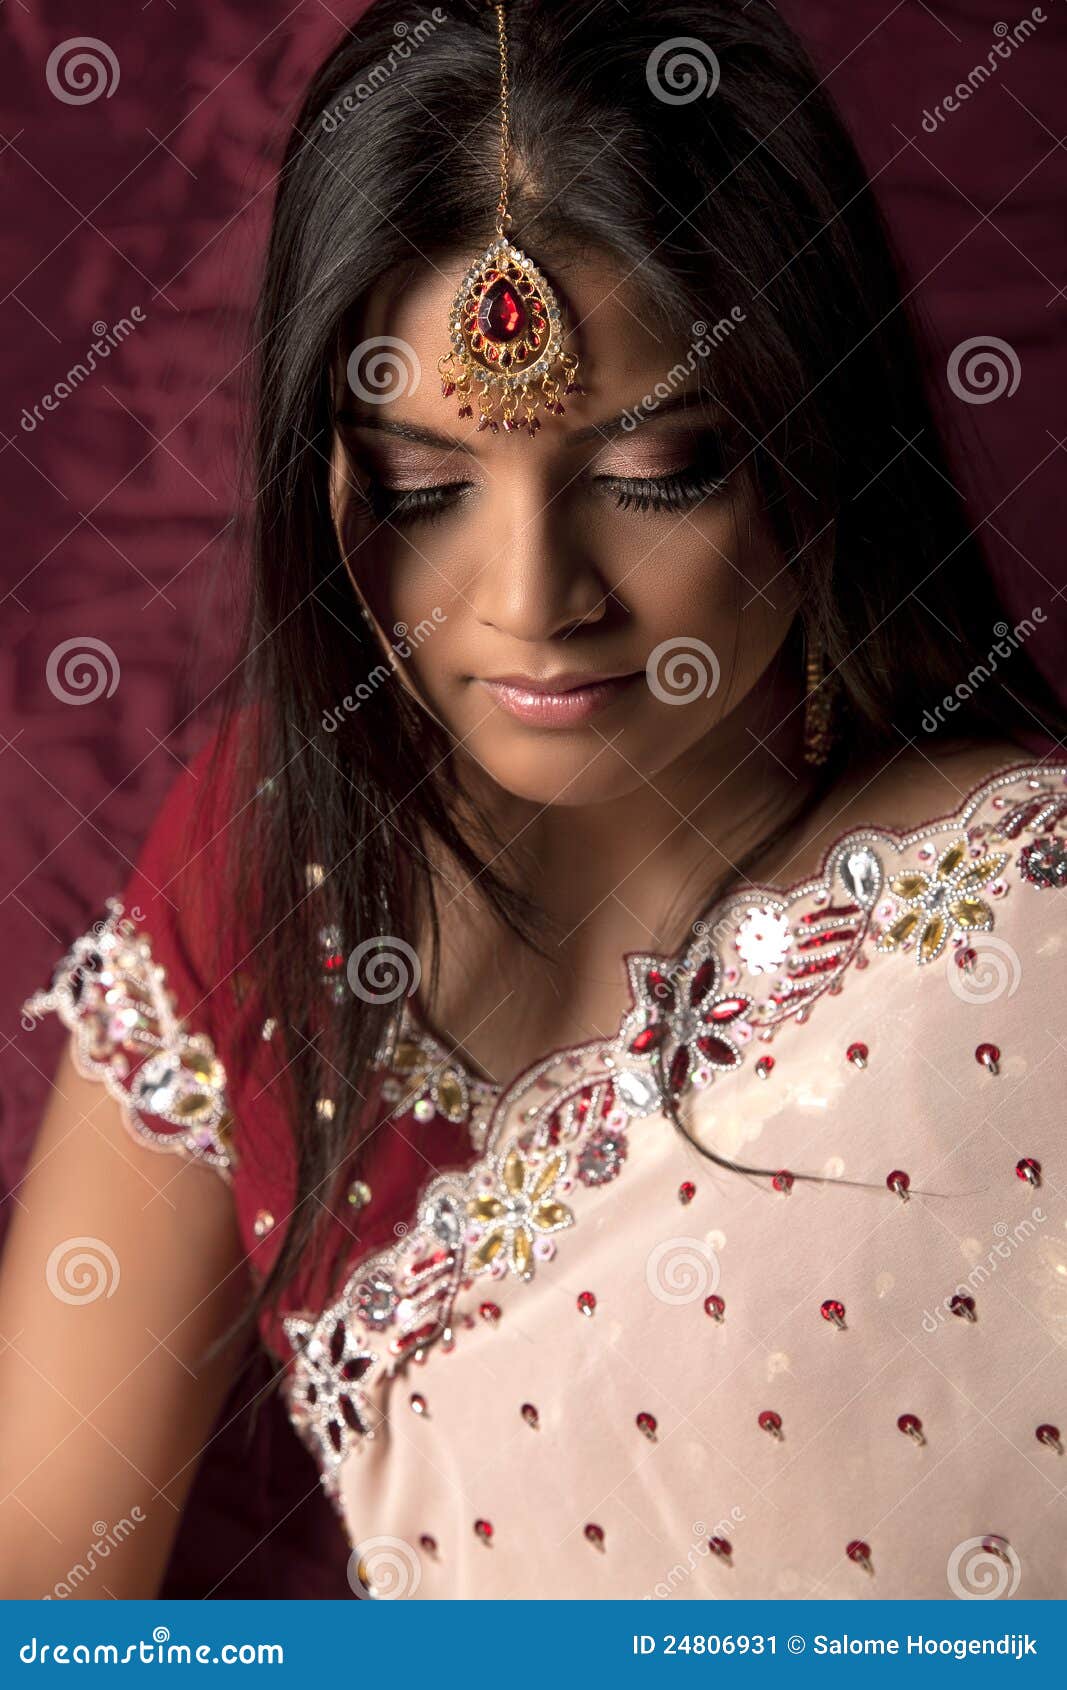 indian bridal beauty with tikka stock image - image of